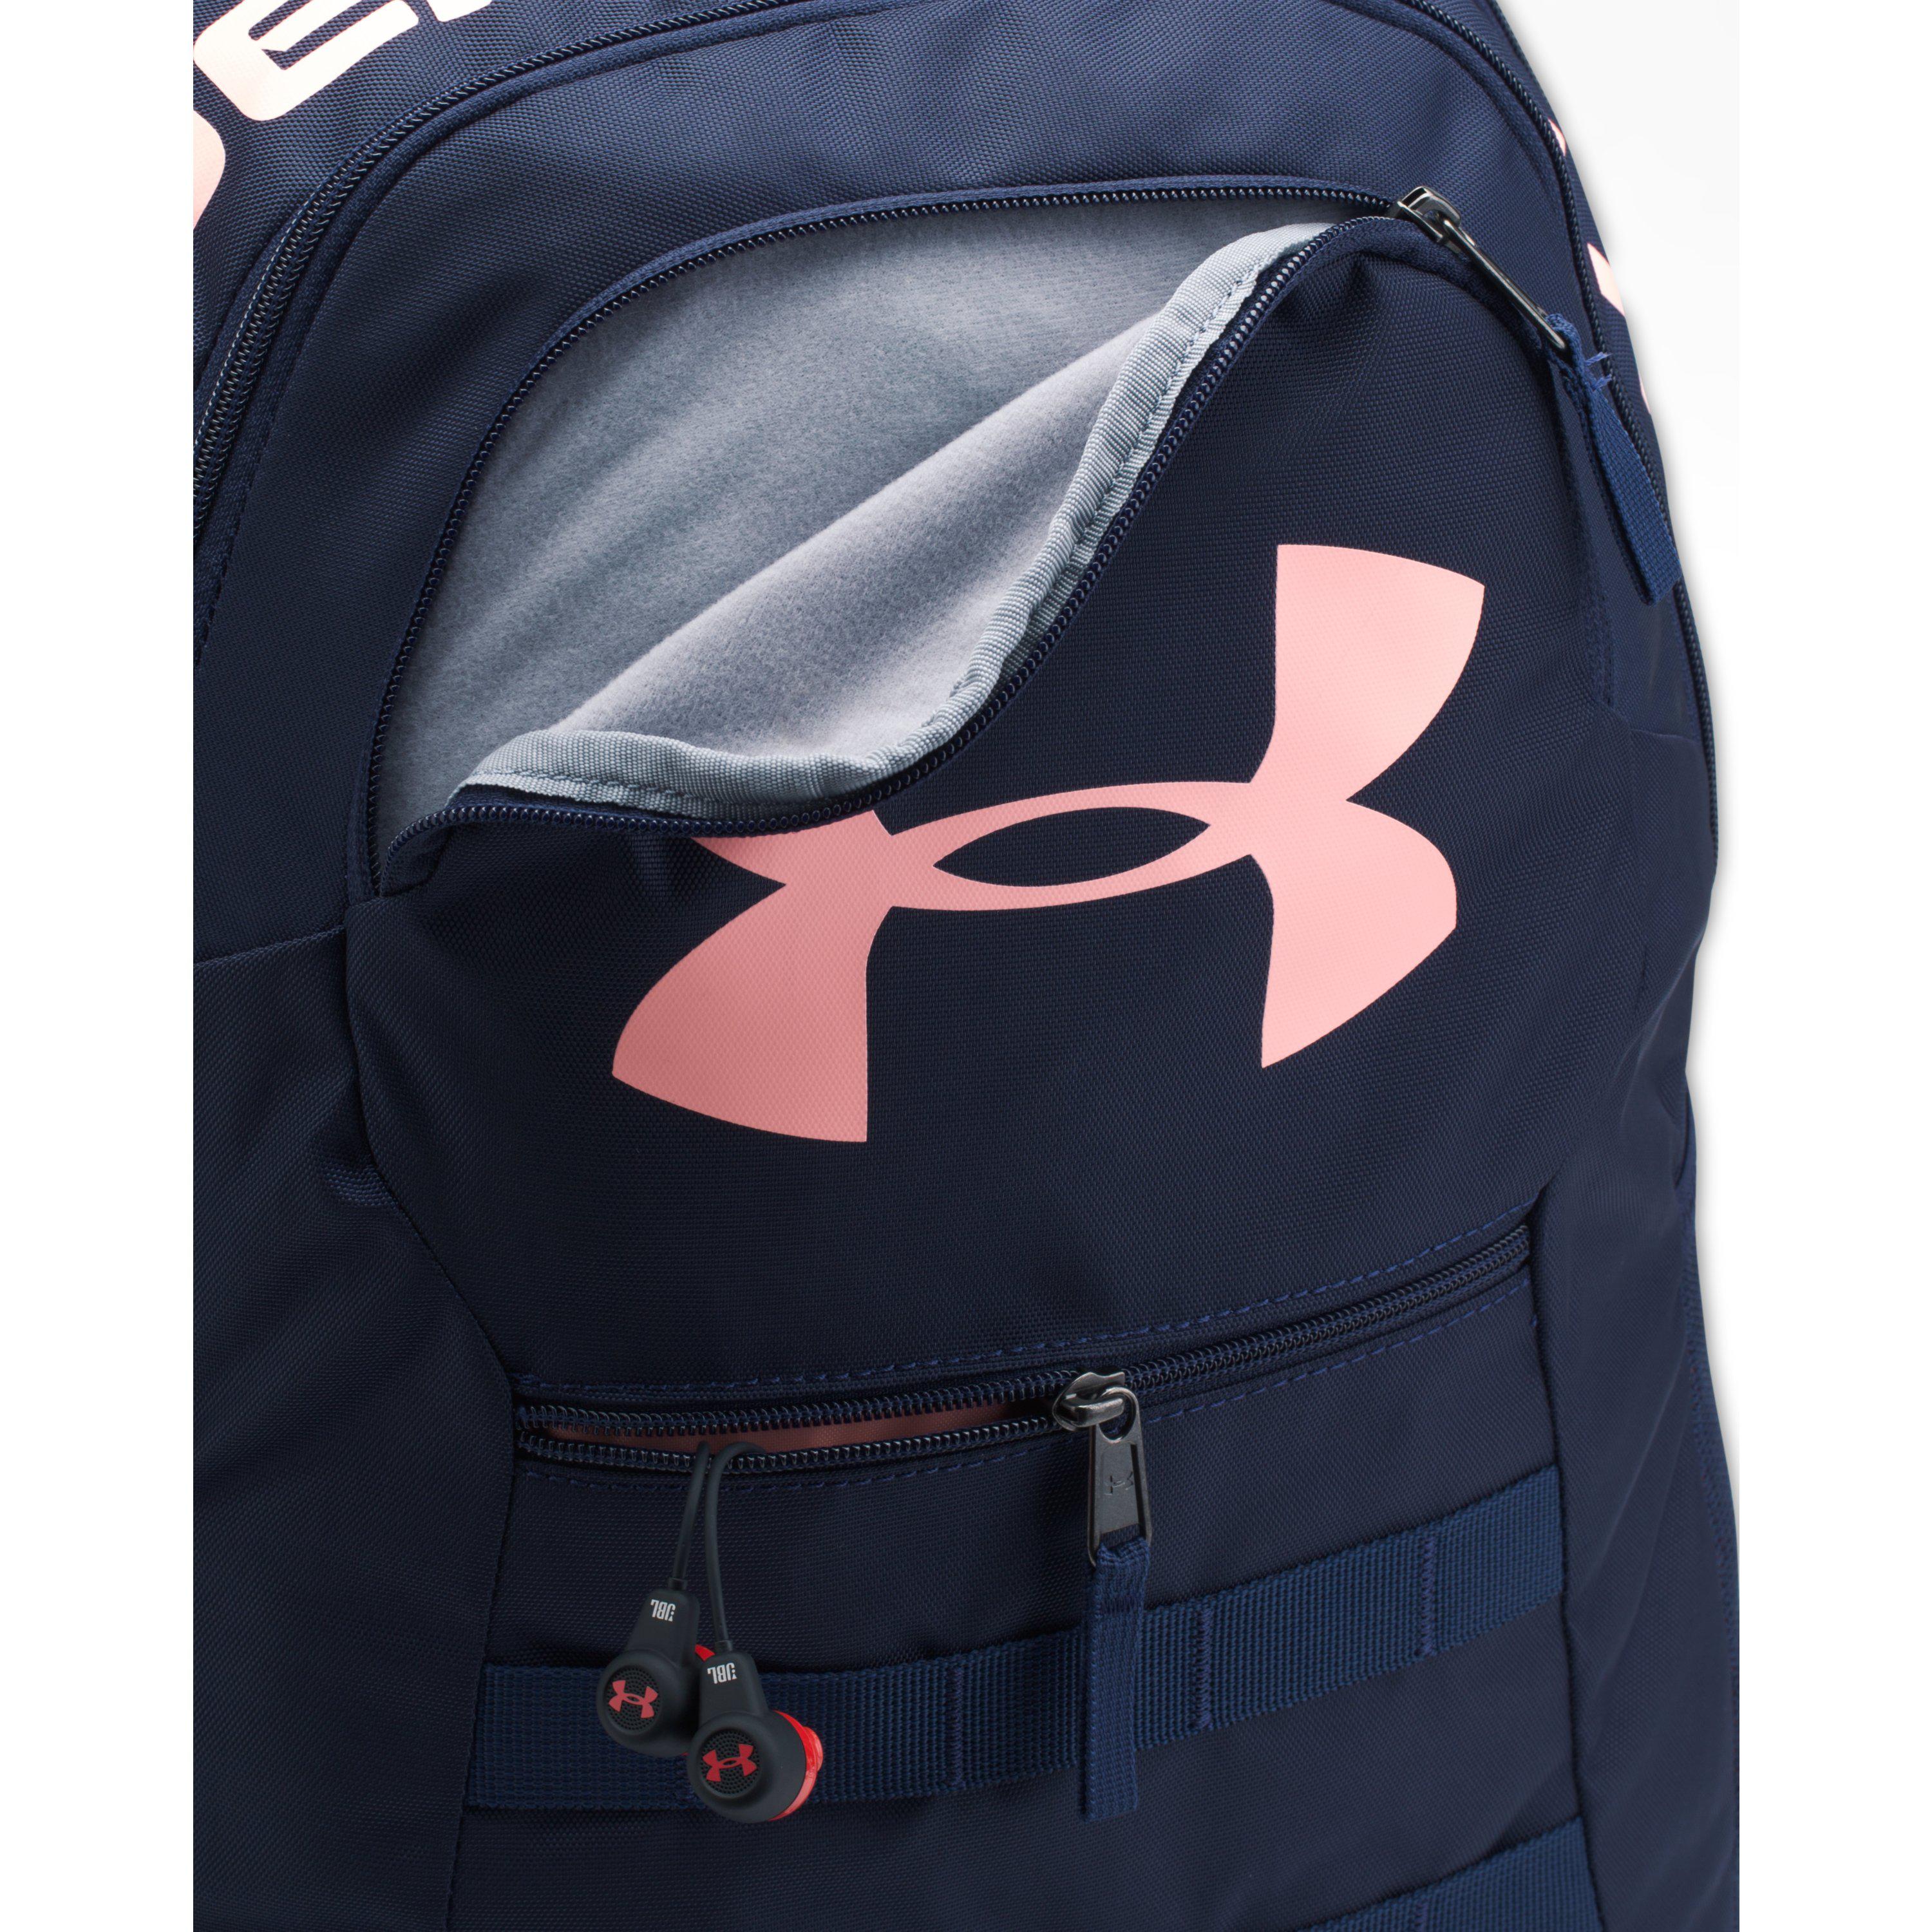 Under Armour Ua Big Logo 5.0 Backpack in Midnight Navy/Midnight Navy (Blue)  | Lyst